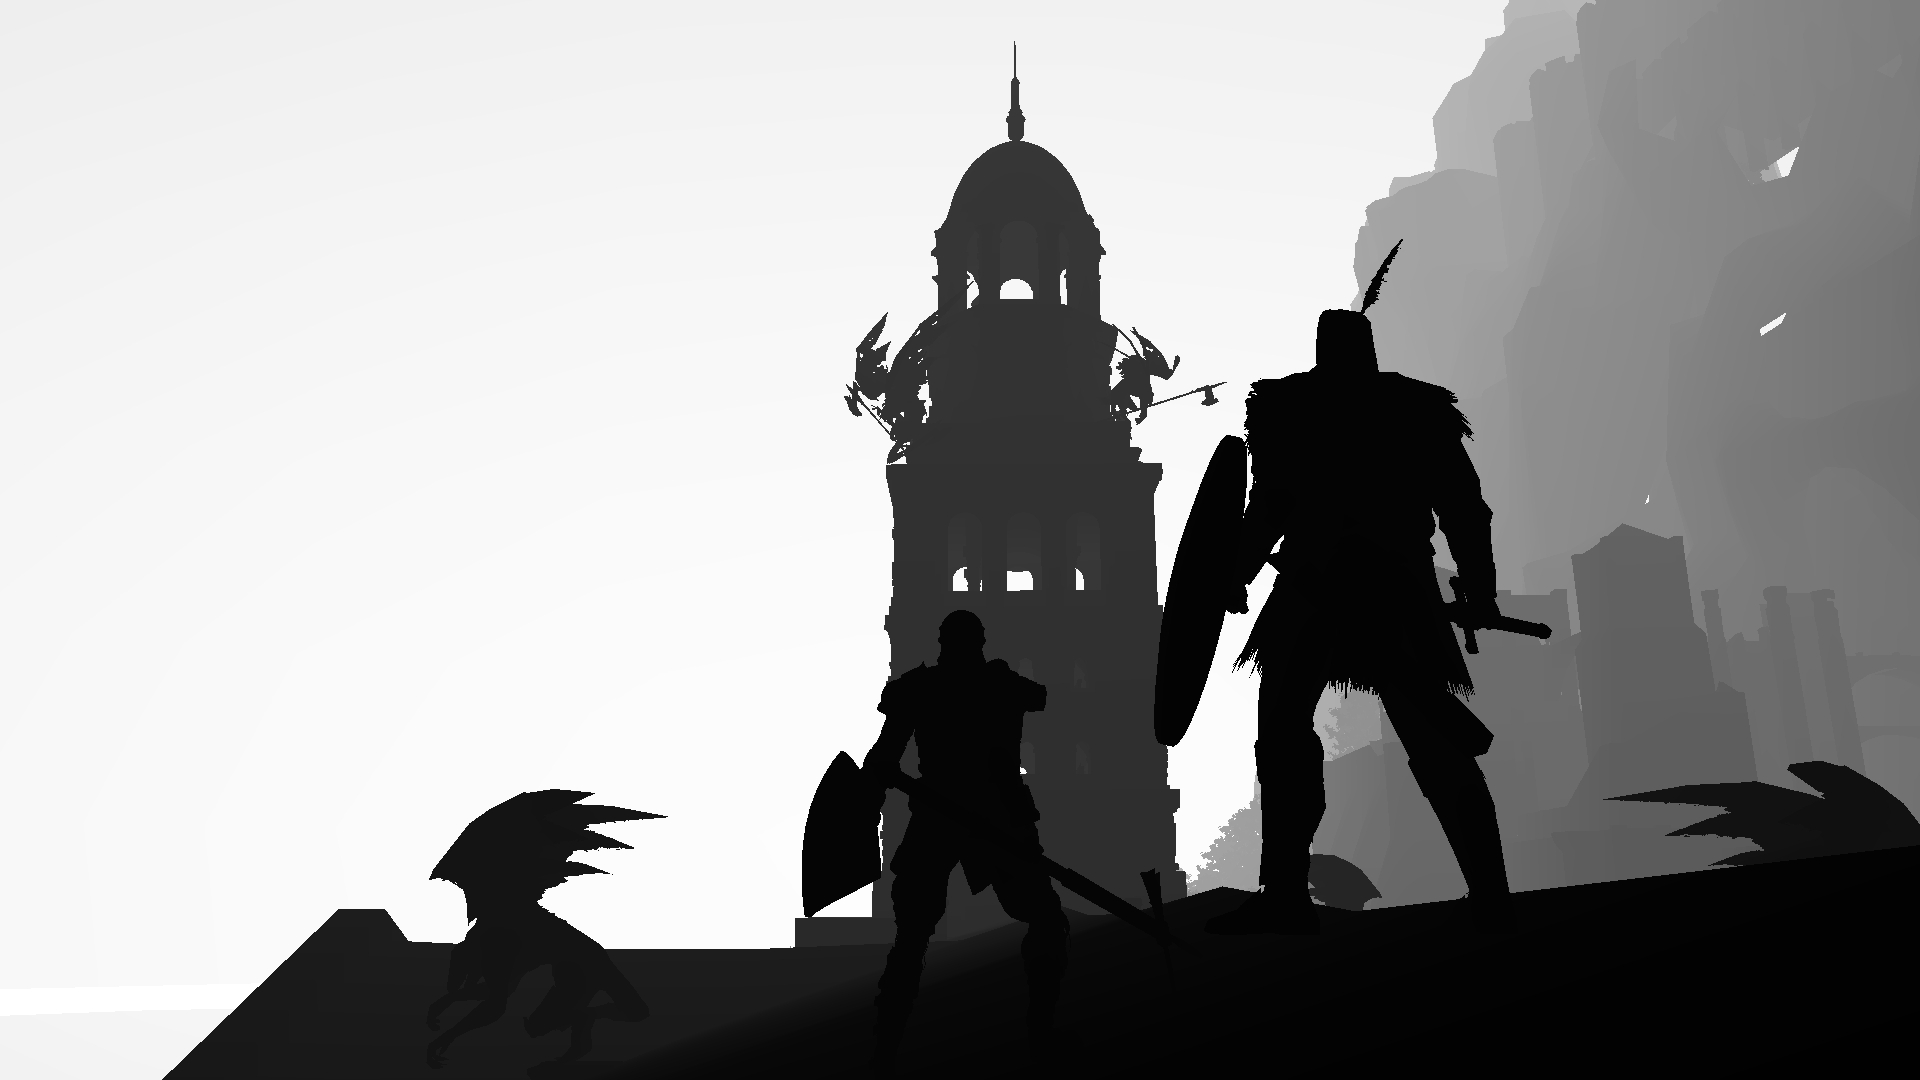 Descarga gratuita de fondo de pantalla para móvil de Dark Souls, Videojuego.